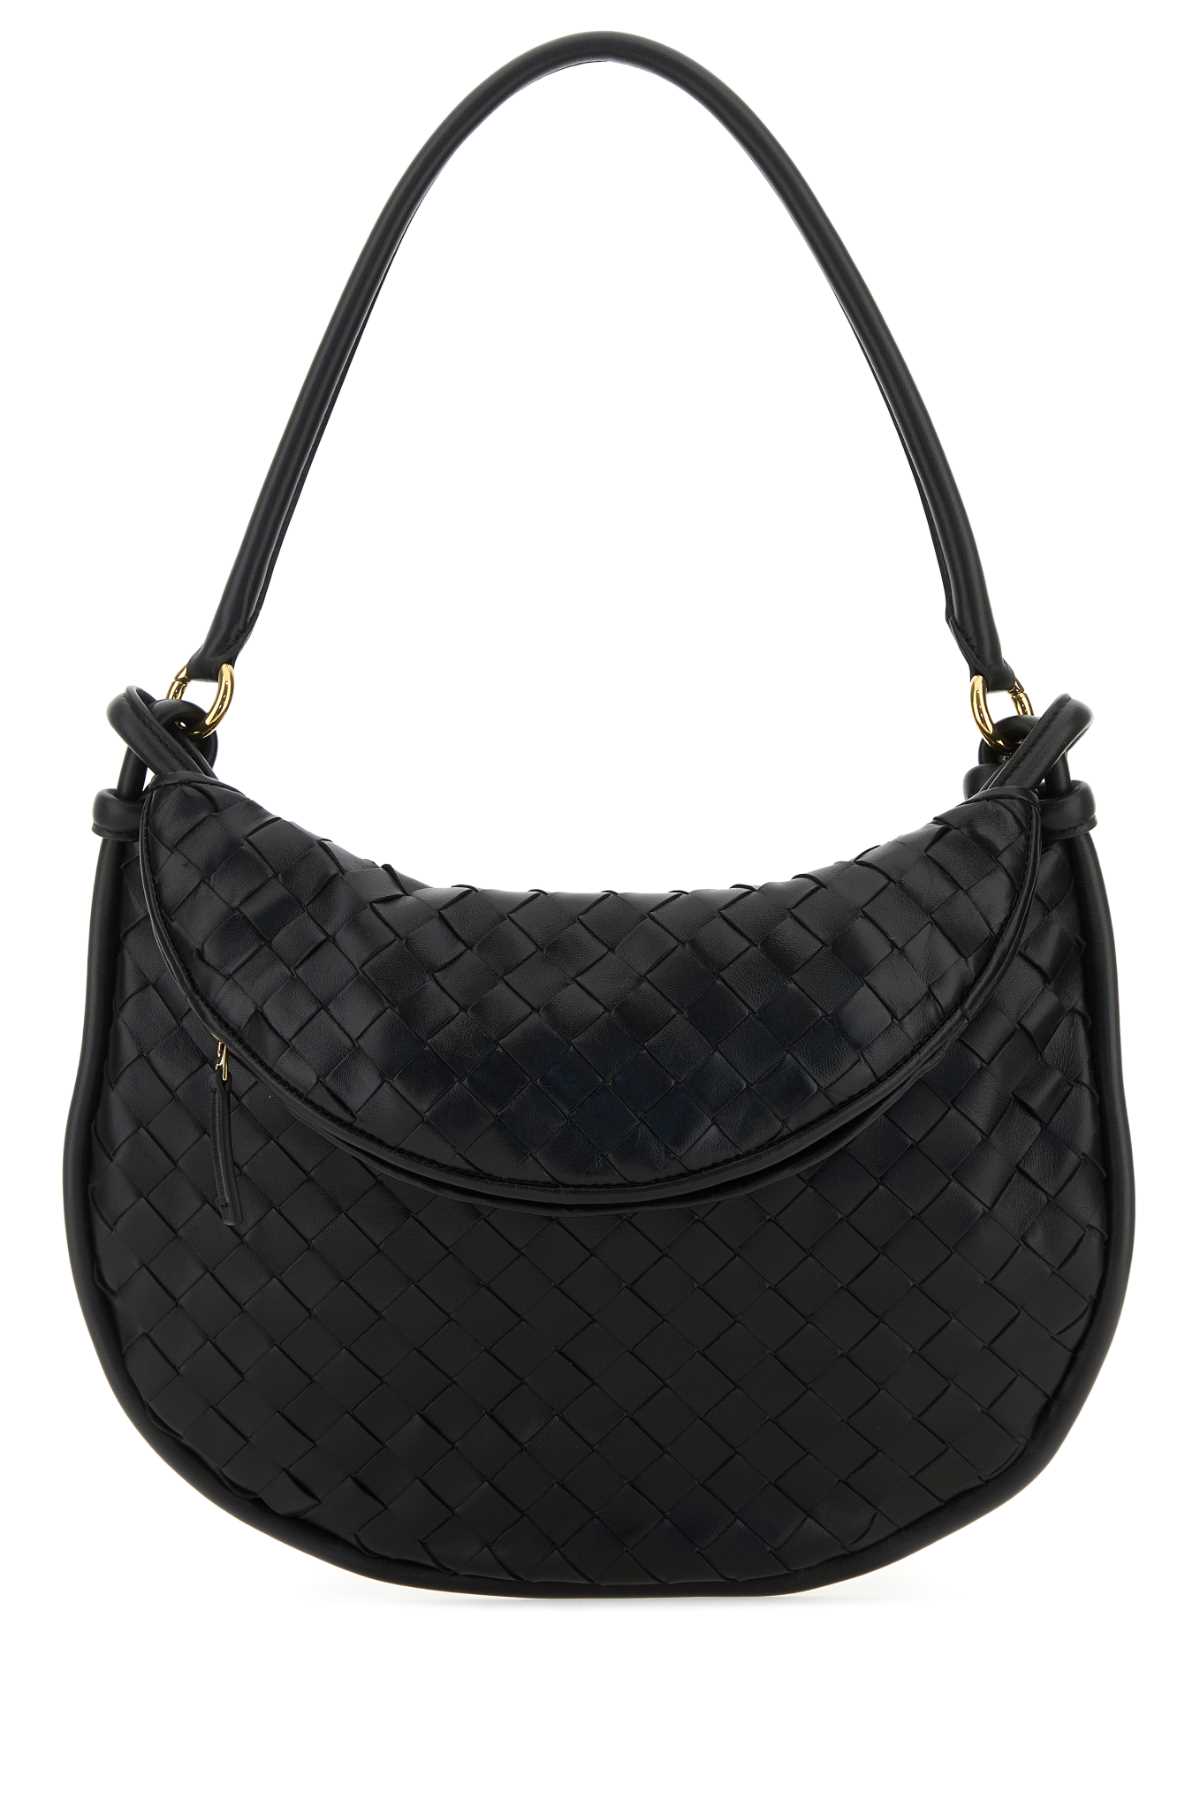 Bottega Veneta Black Leather Medium Gemelli Shoulder Bag